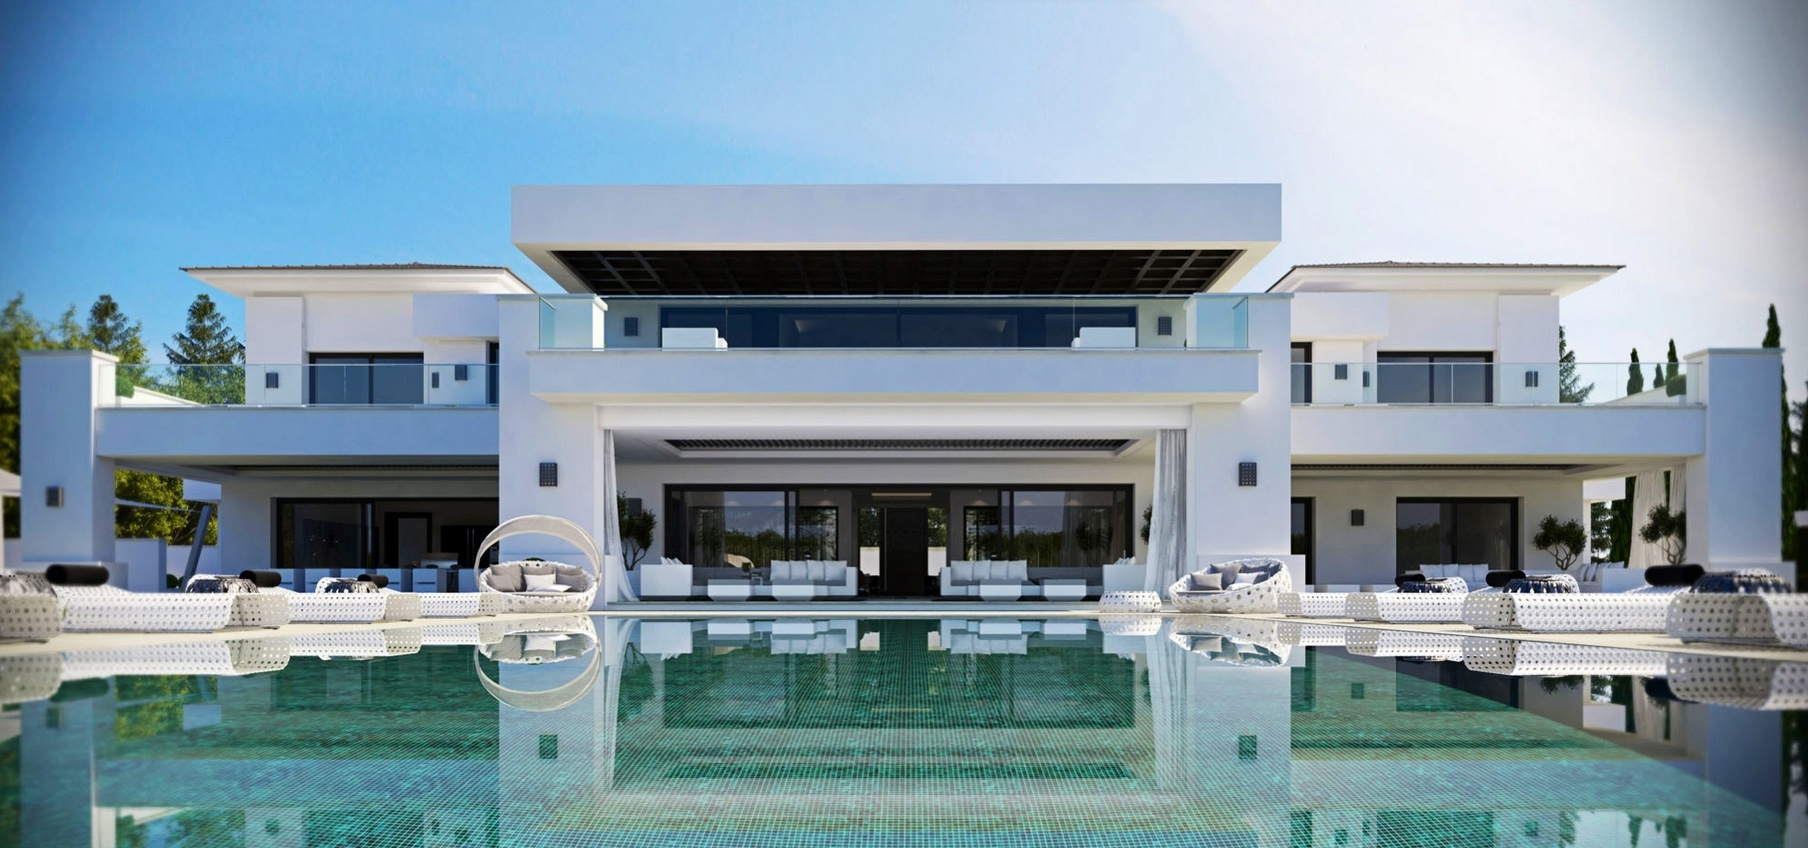 Luxurious 9 Bedroom Spanish Home With Indoor & Outdoor Pools